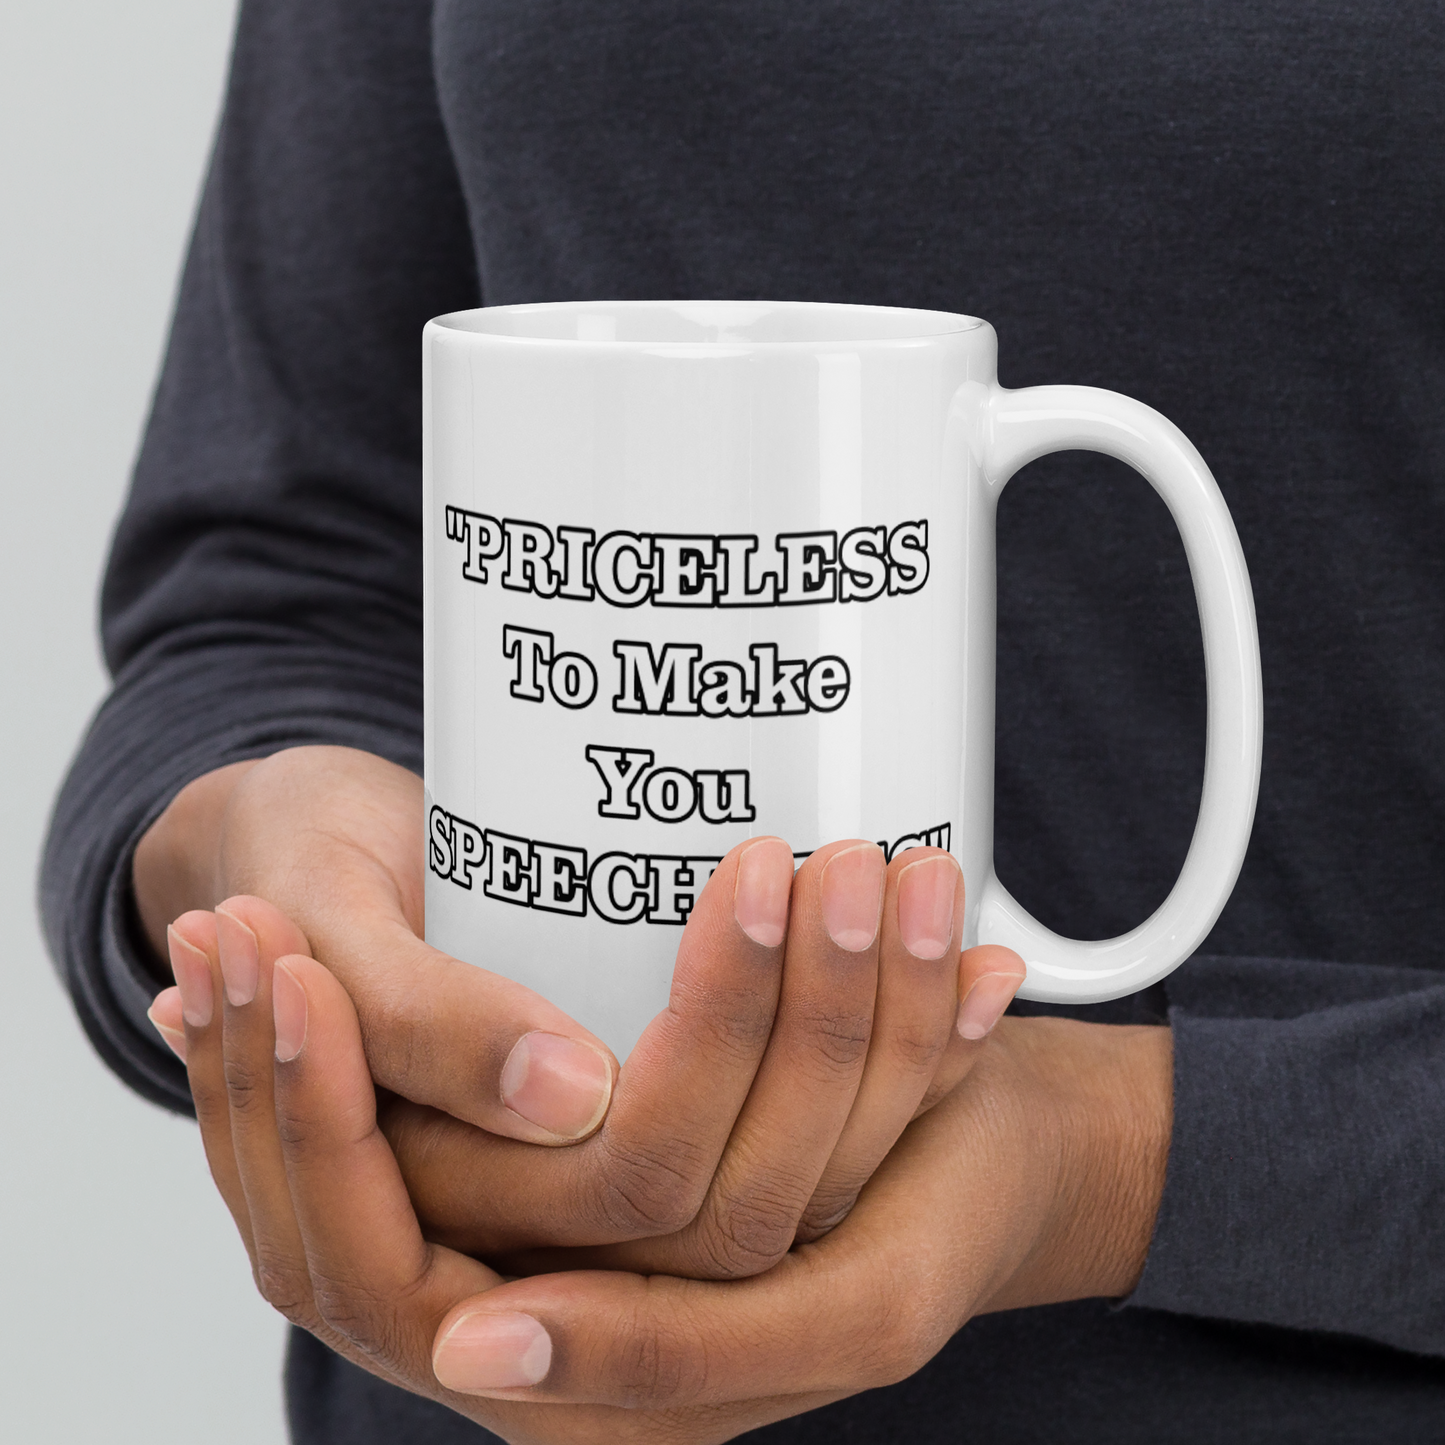 Priceless to Make You Speechless Mug